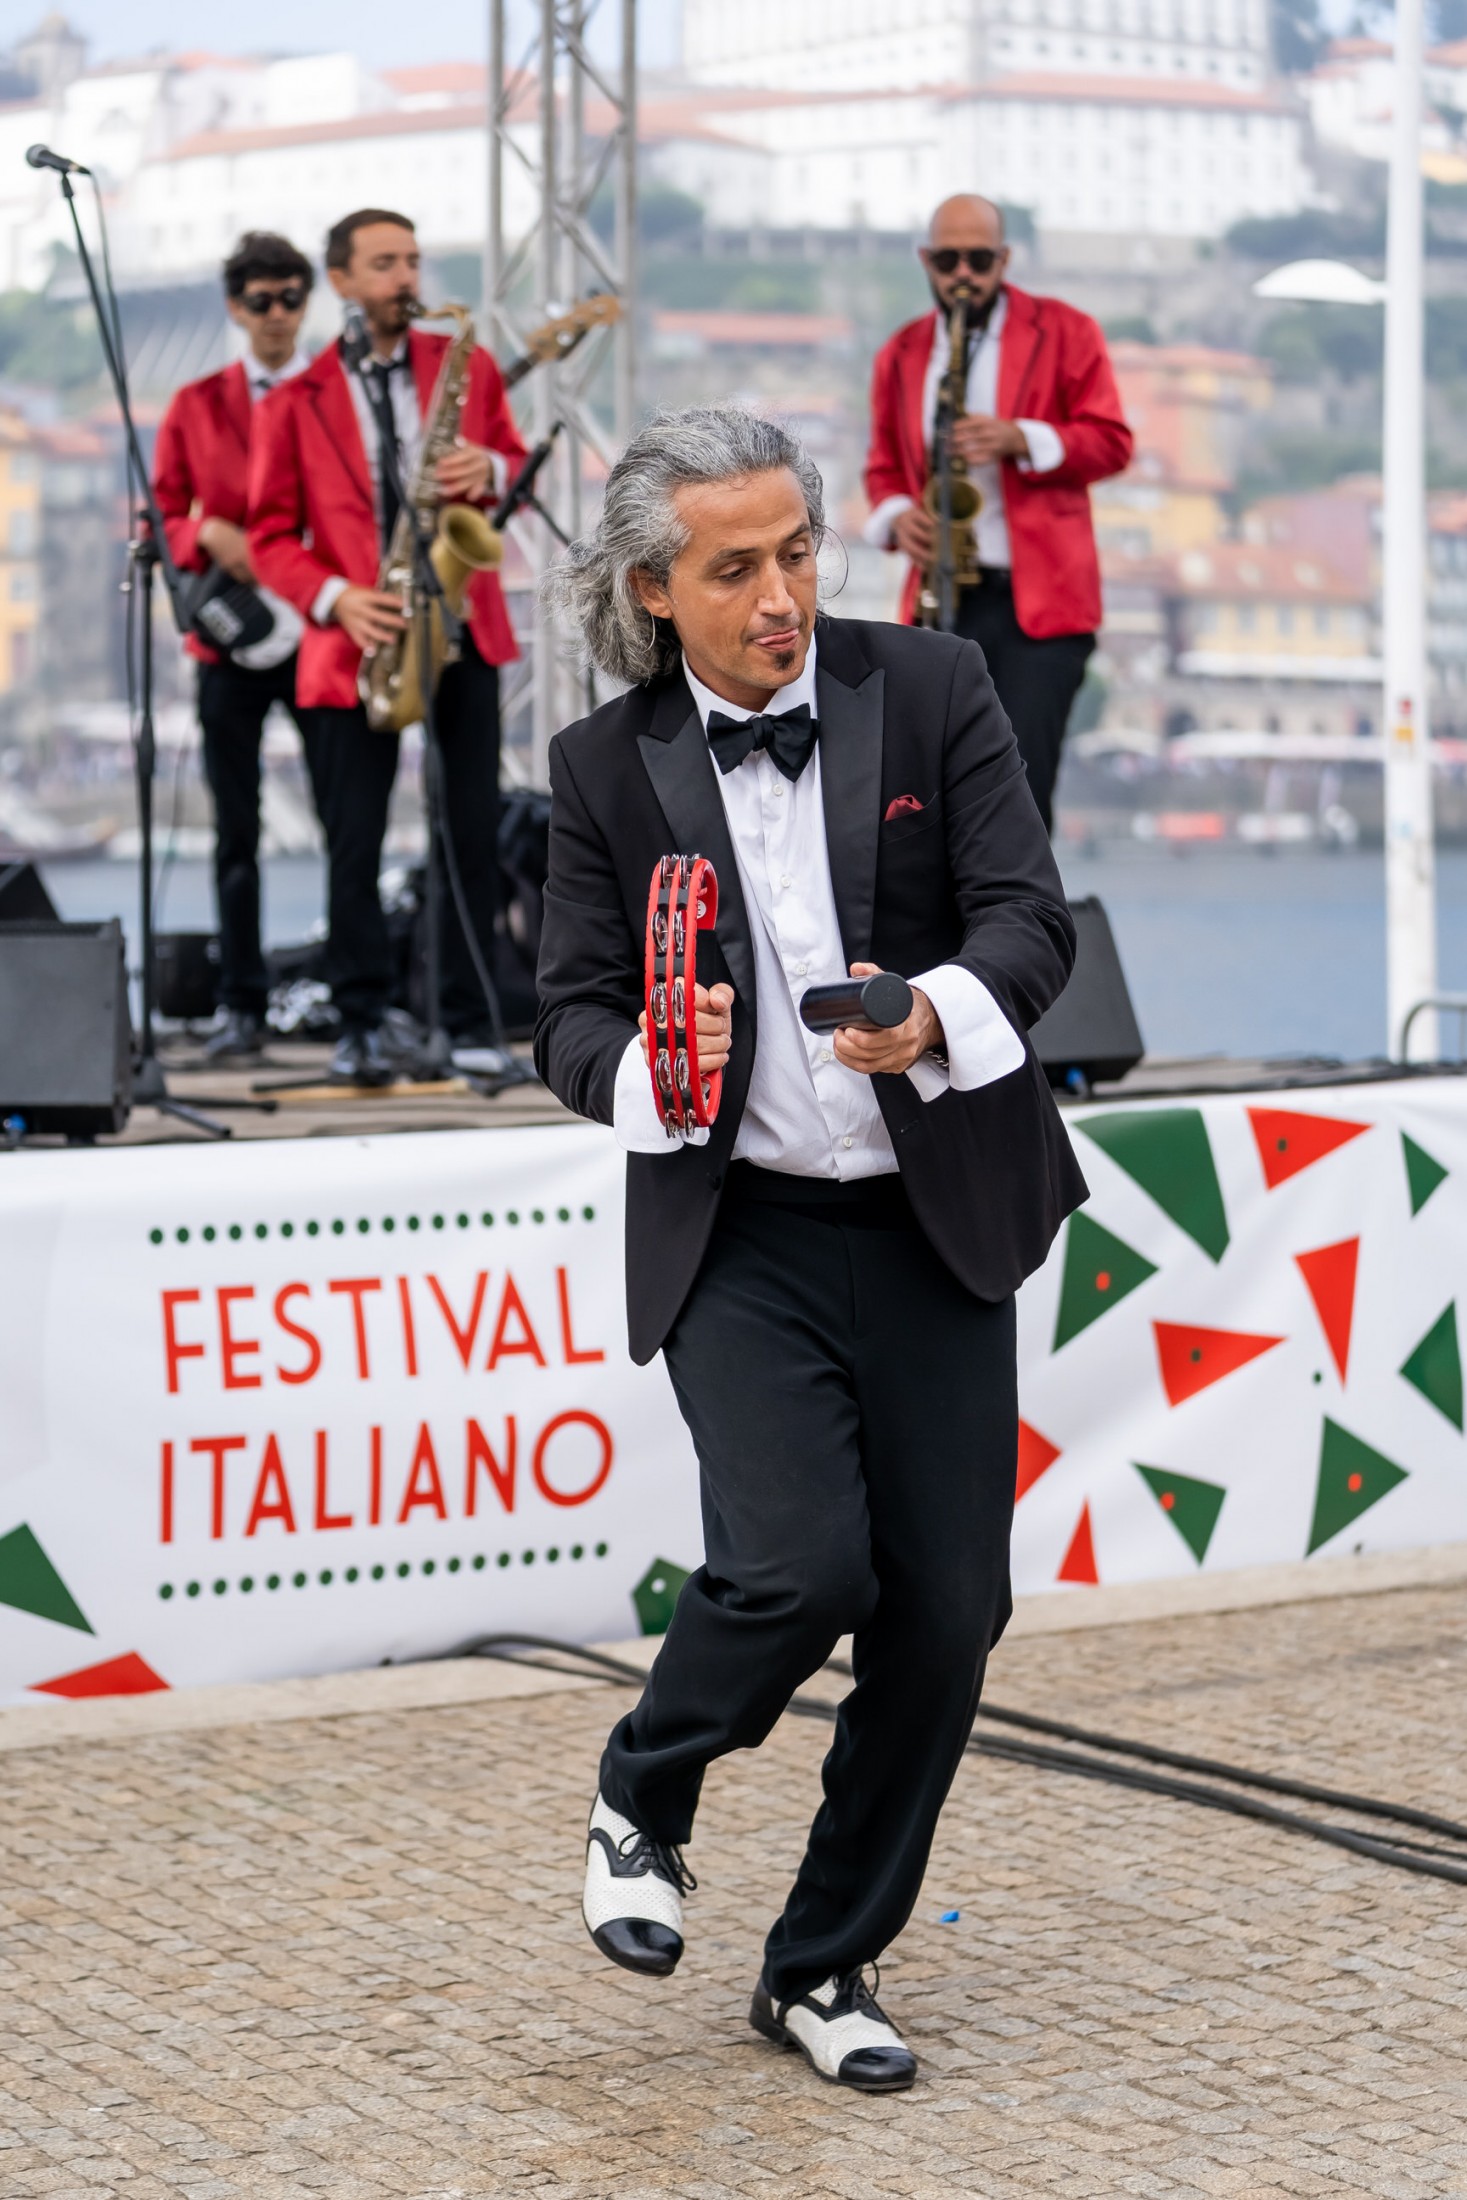 Festival Italiano V.N.Gaia 2018